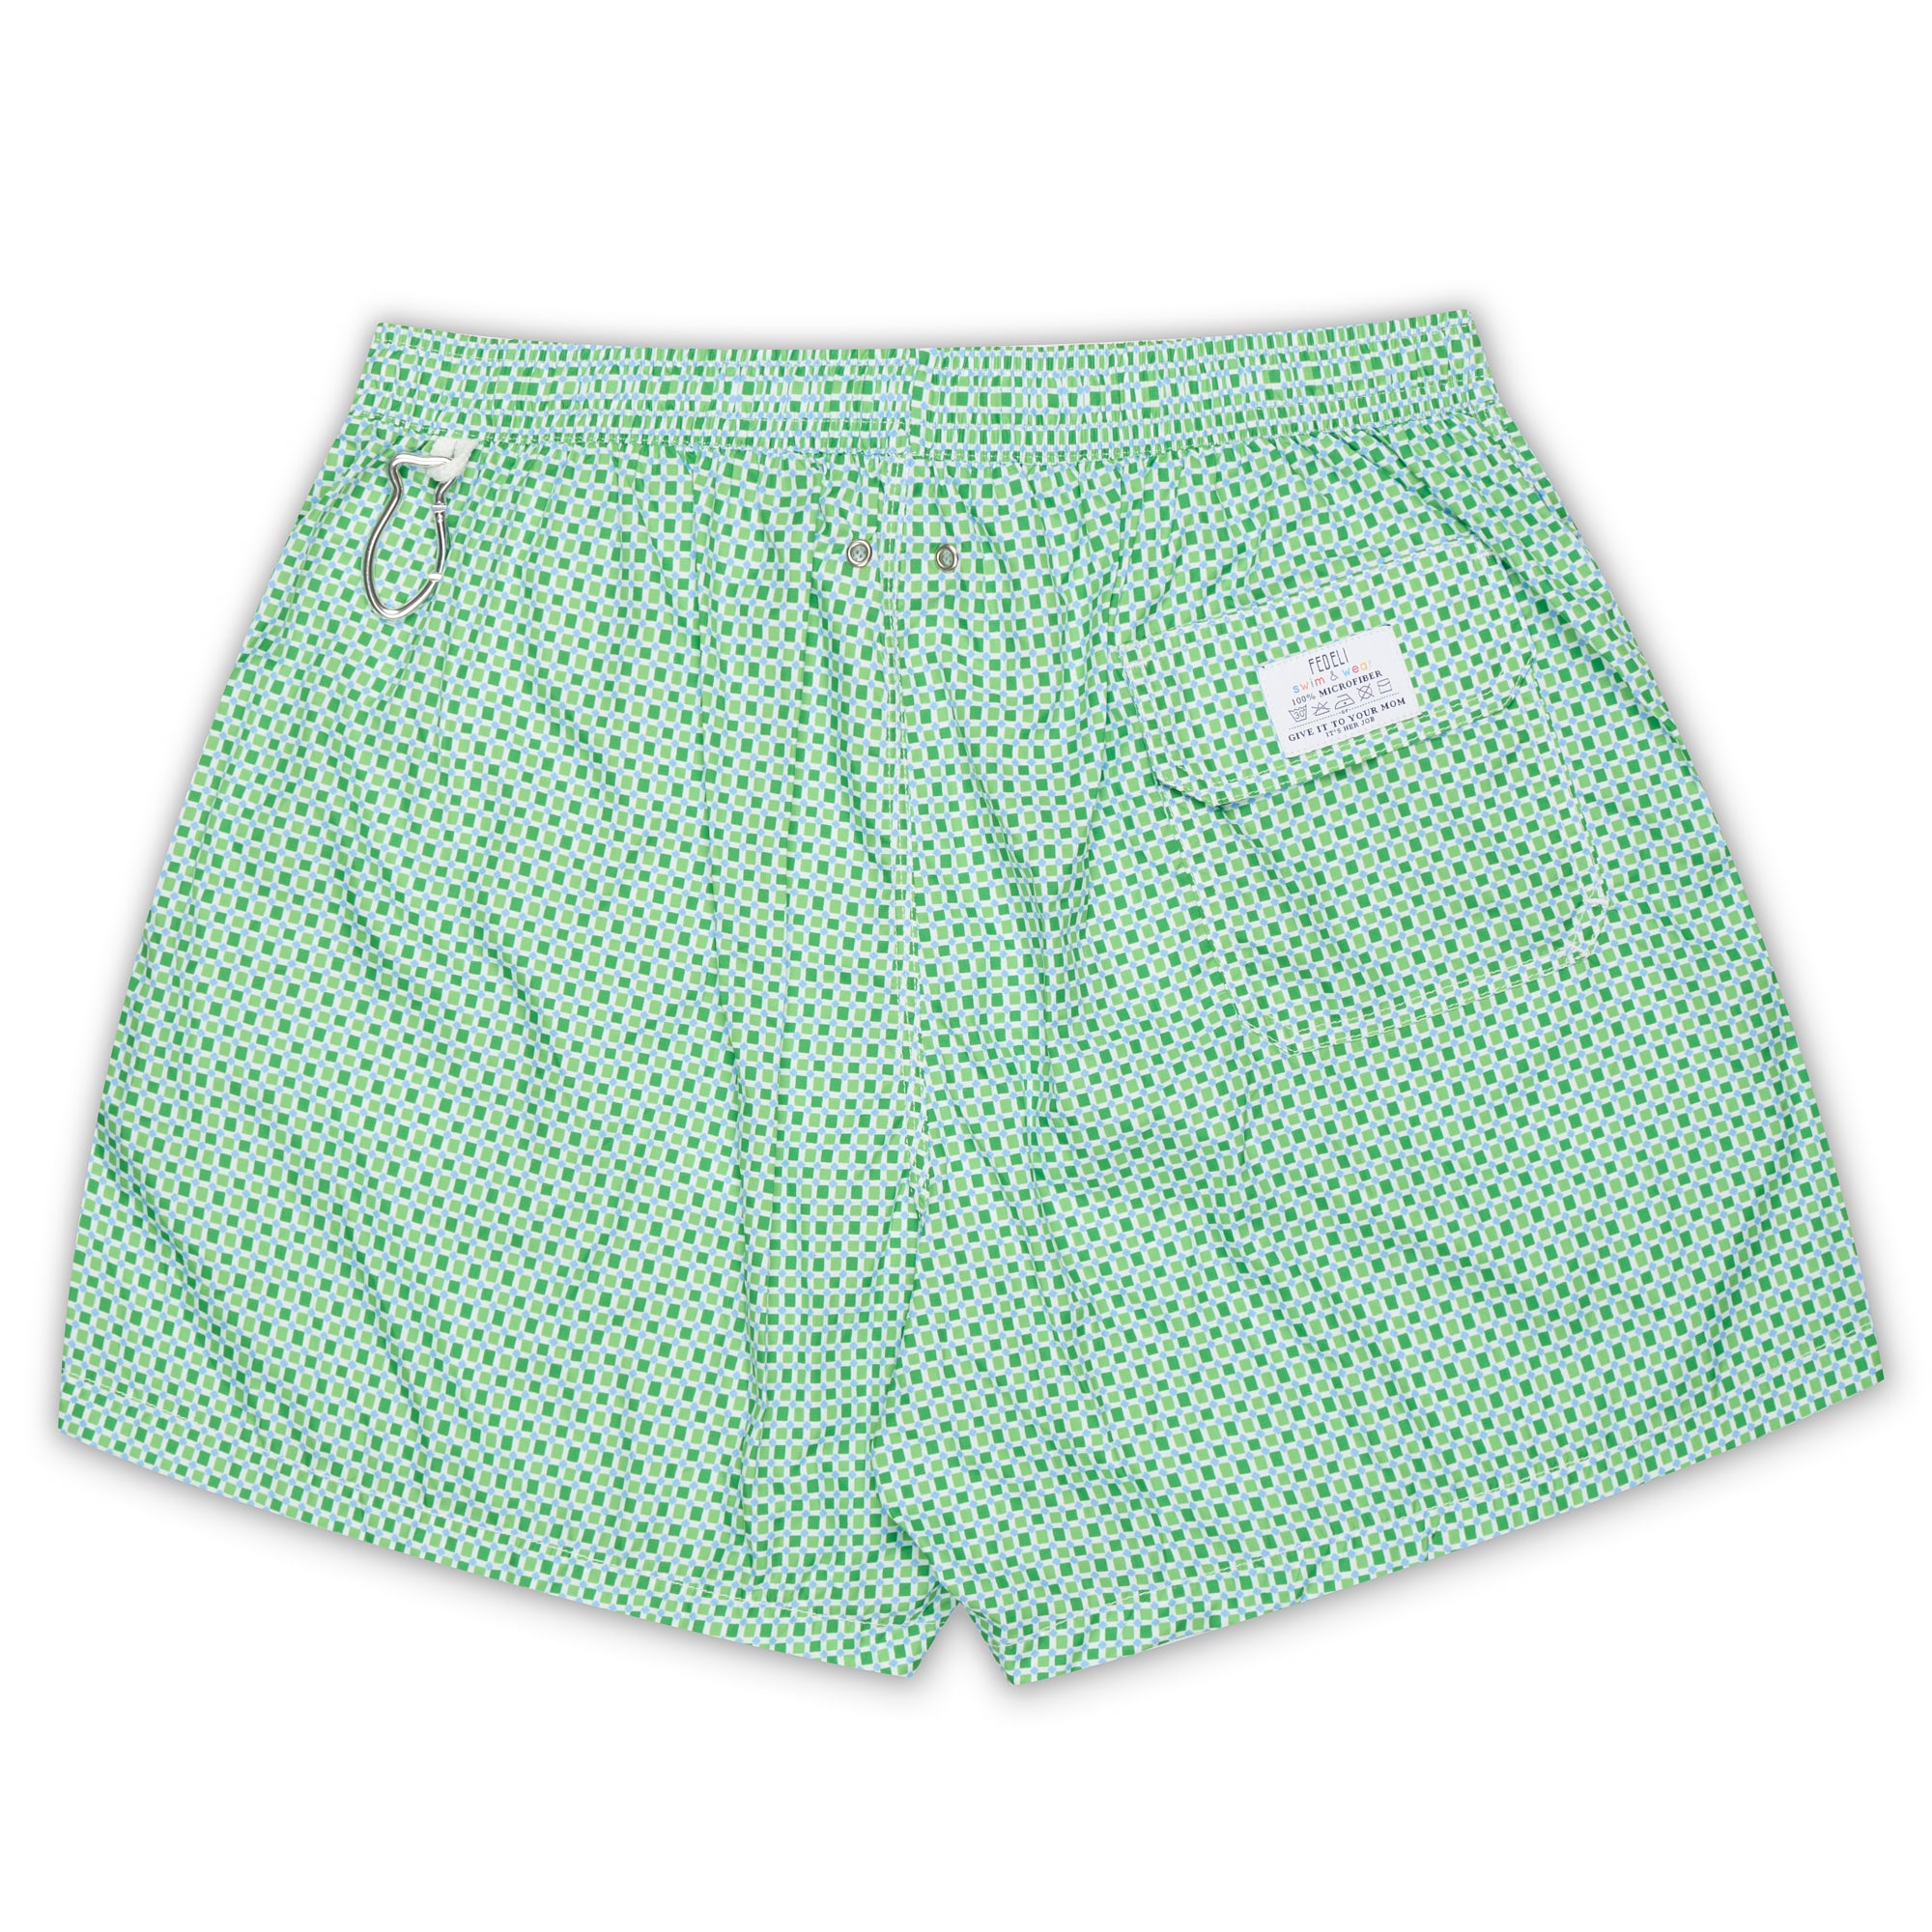 FEDELI Green Checkered Printed Madeira Airstop Trunks Swim Shorts NEW 2XL FEDELI